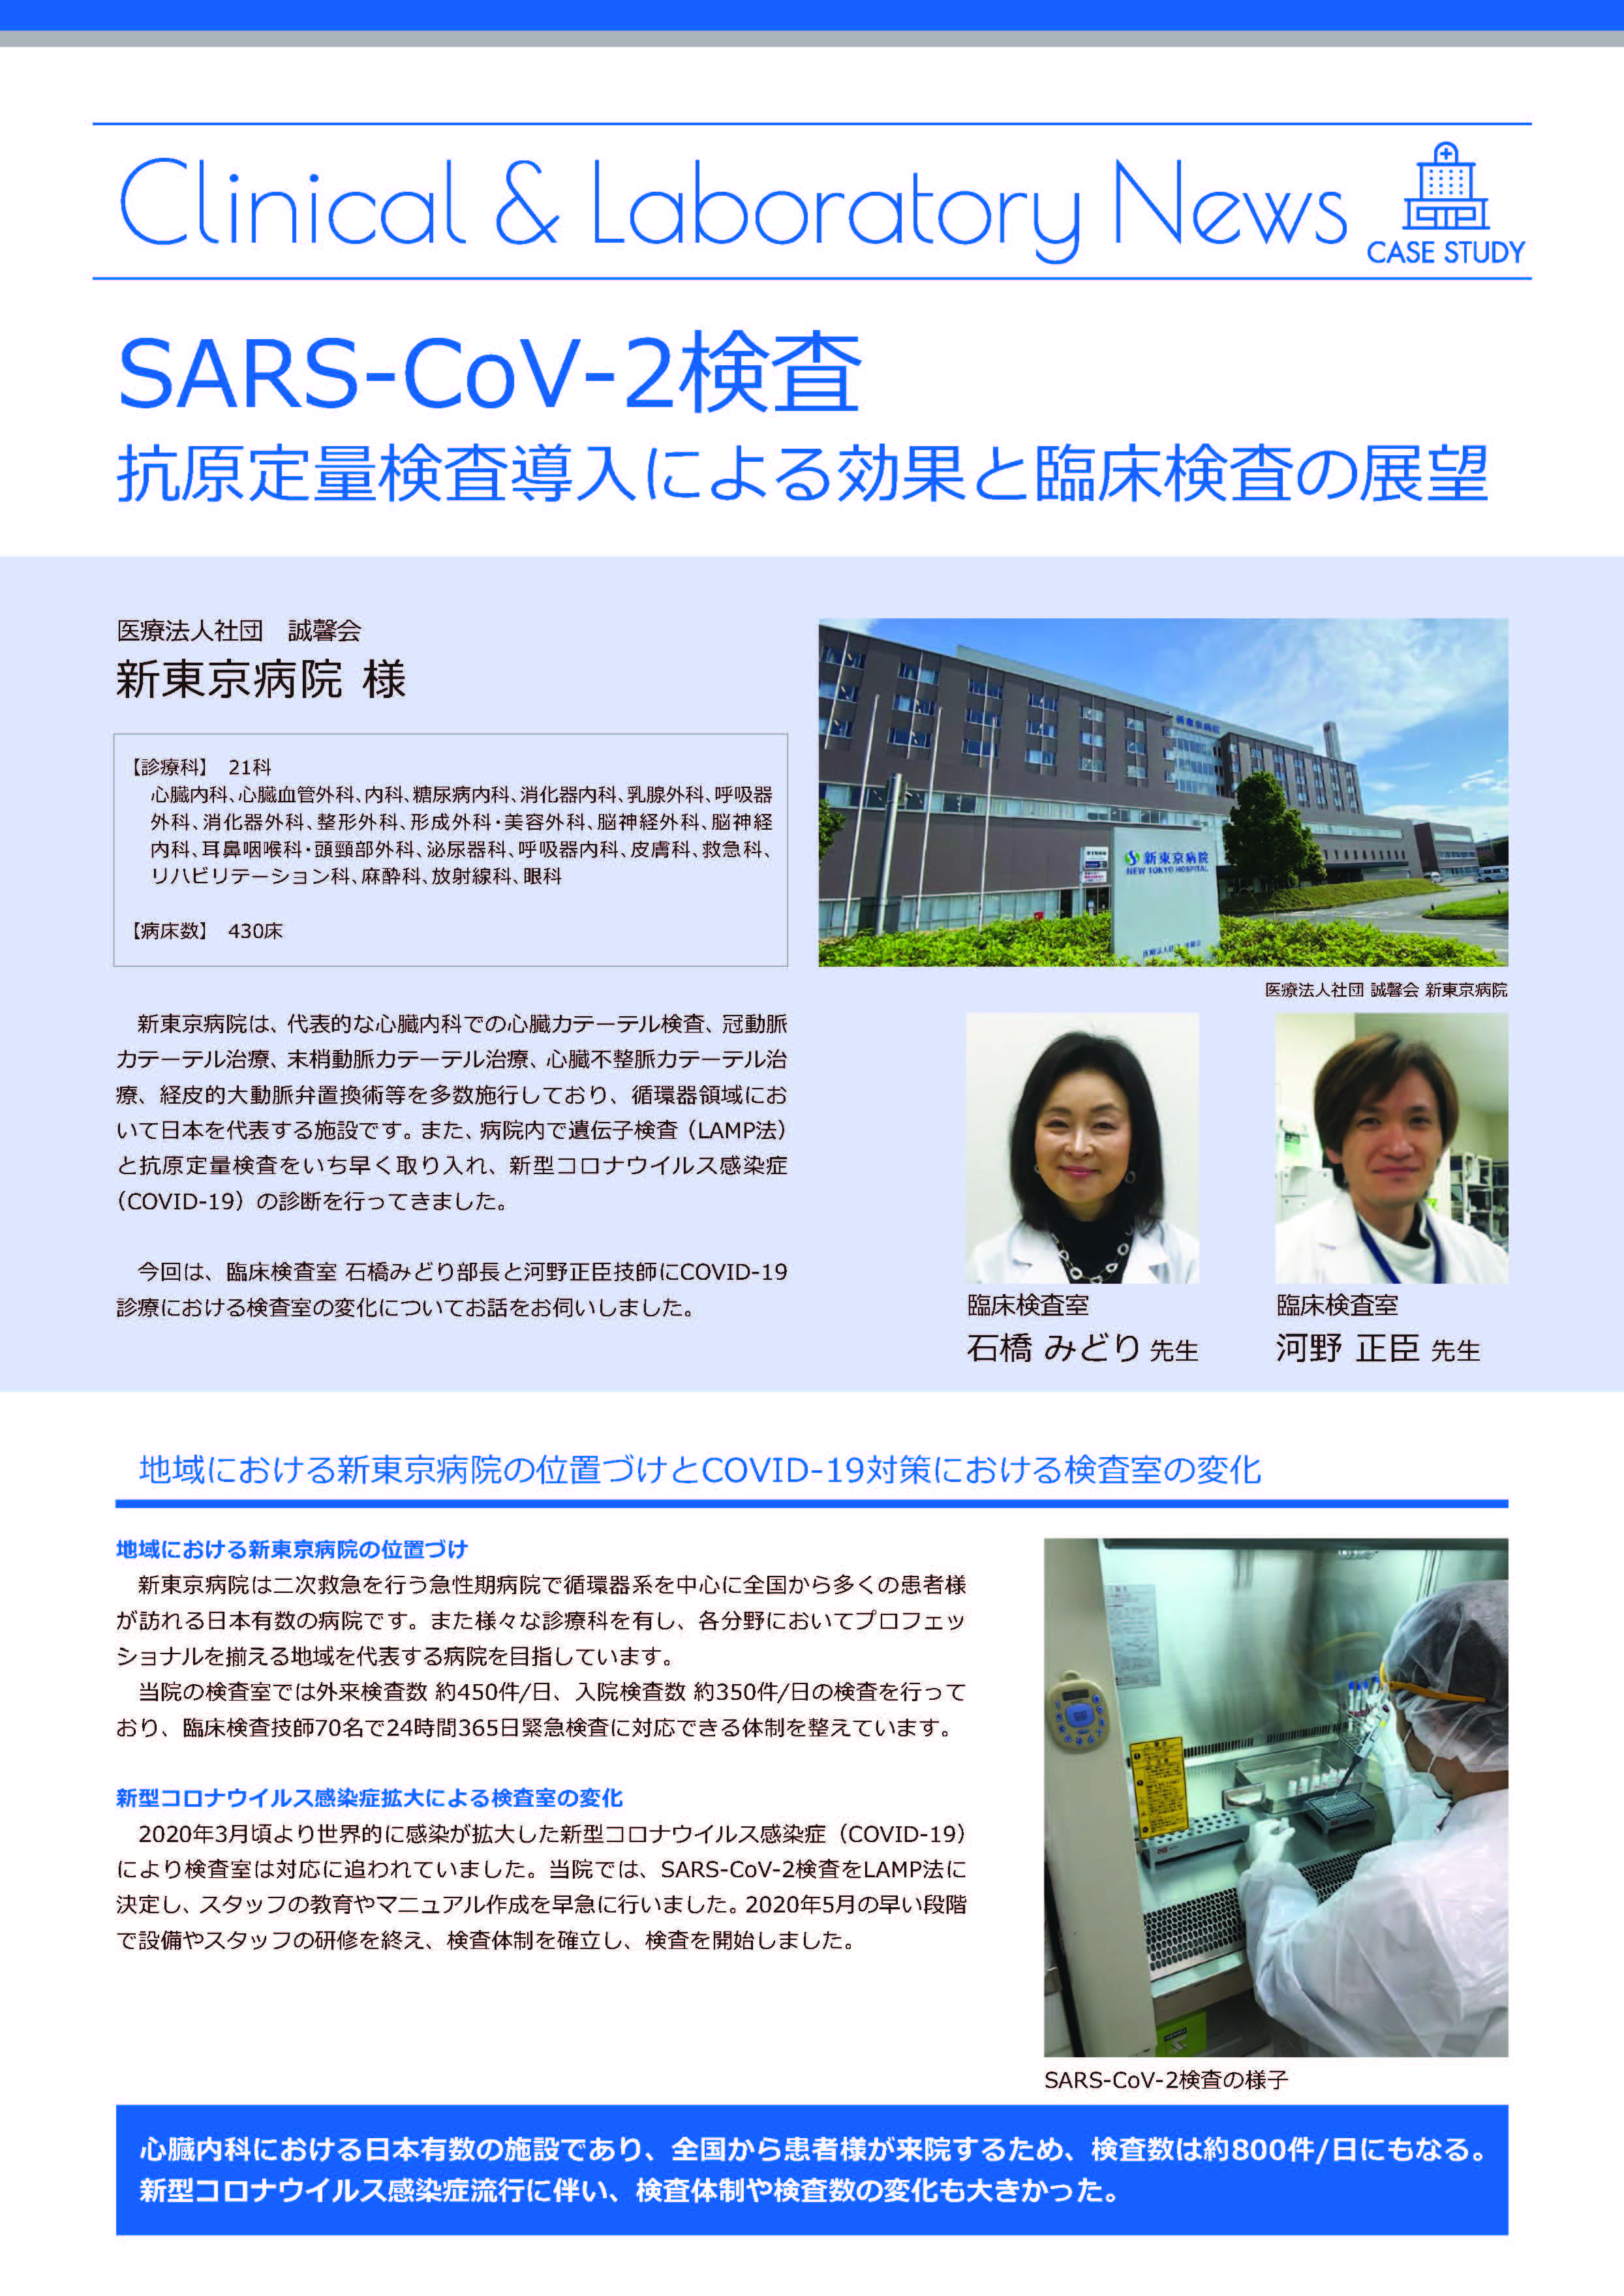 SARS-CoV-2検査 抗原定量検査導入による効果と臨床検査の展望